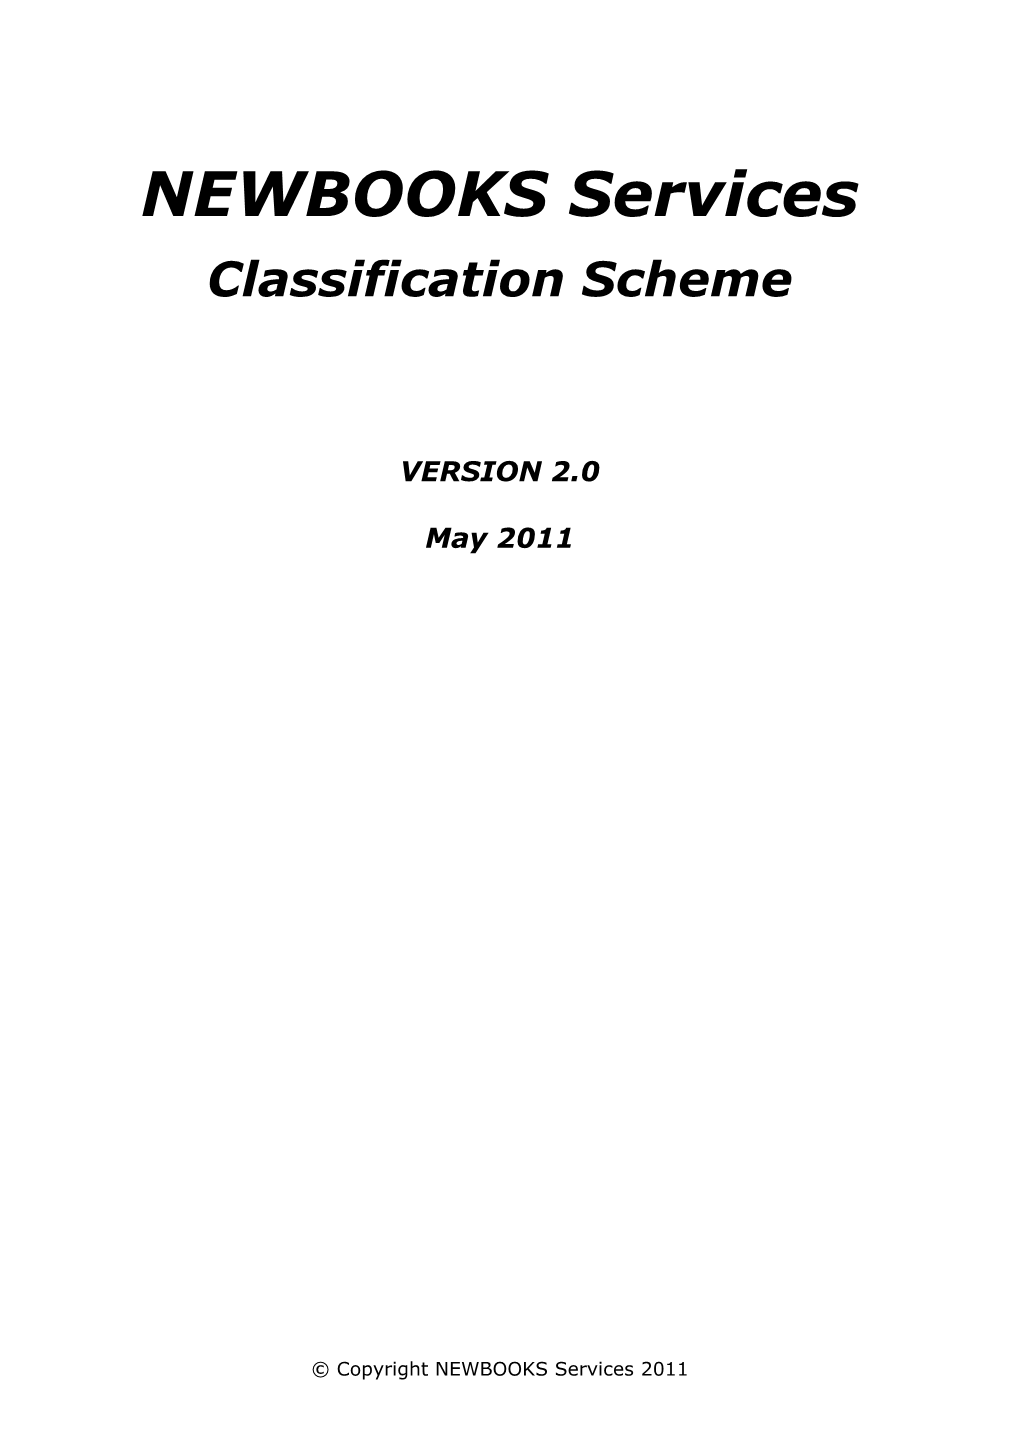 NEWBOOKS Services Classification Scheme